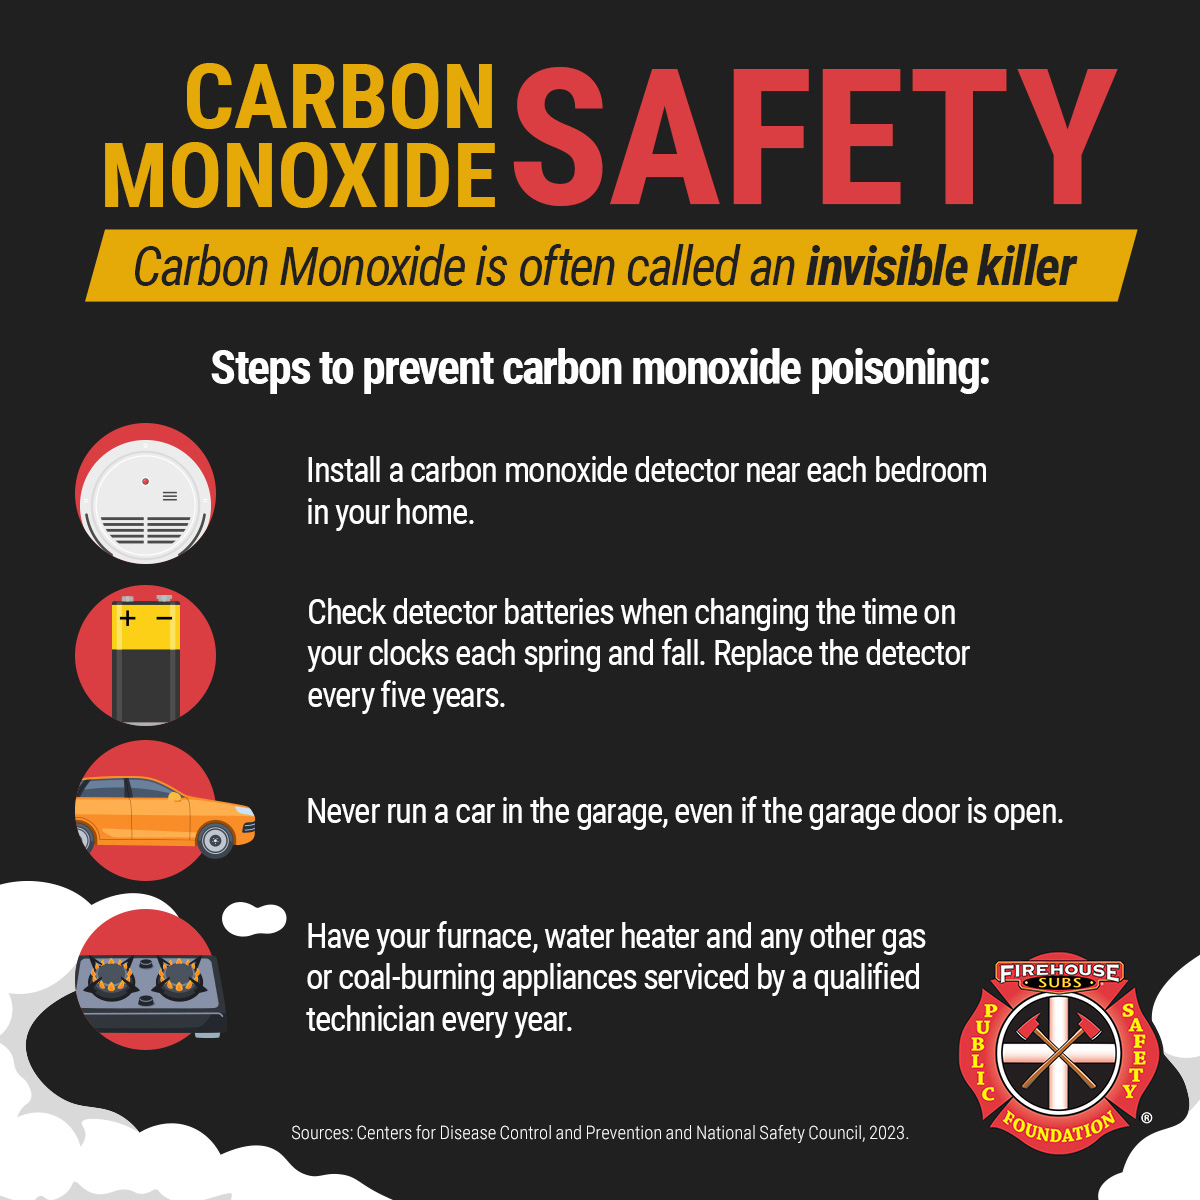 Carbon Monoxide Safety Tips